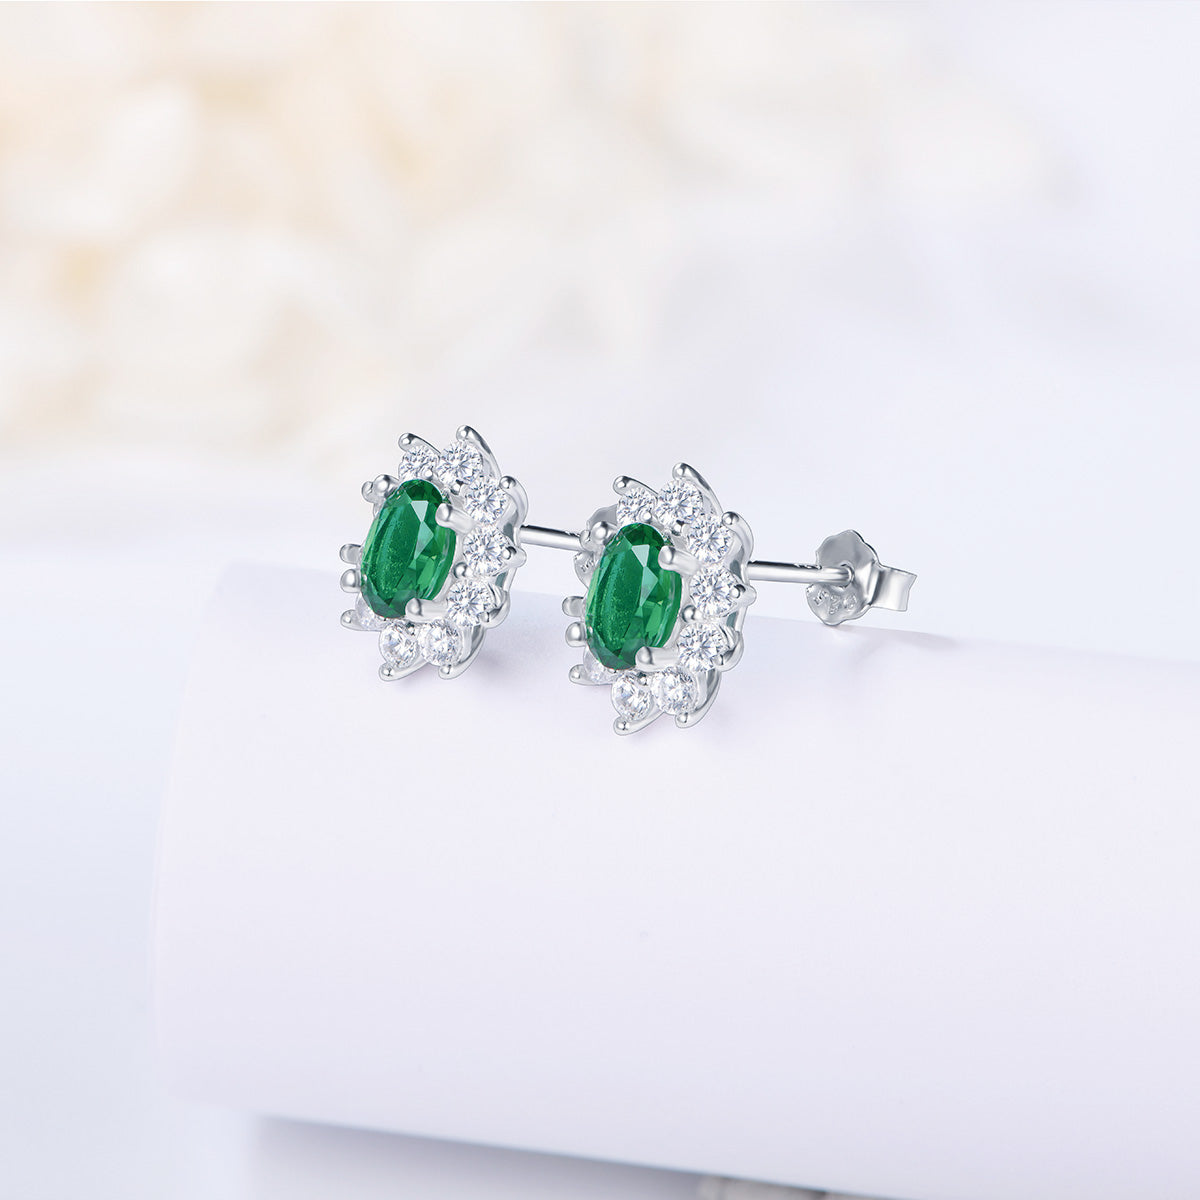 White Gold Sun Flower Full Stones Stud Earrings with Oval Brilliant Cut Emerald Gem